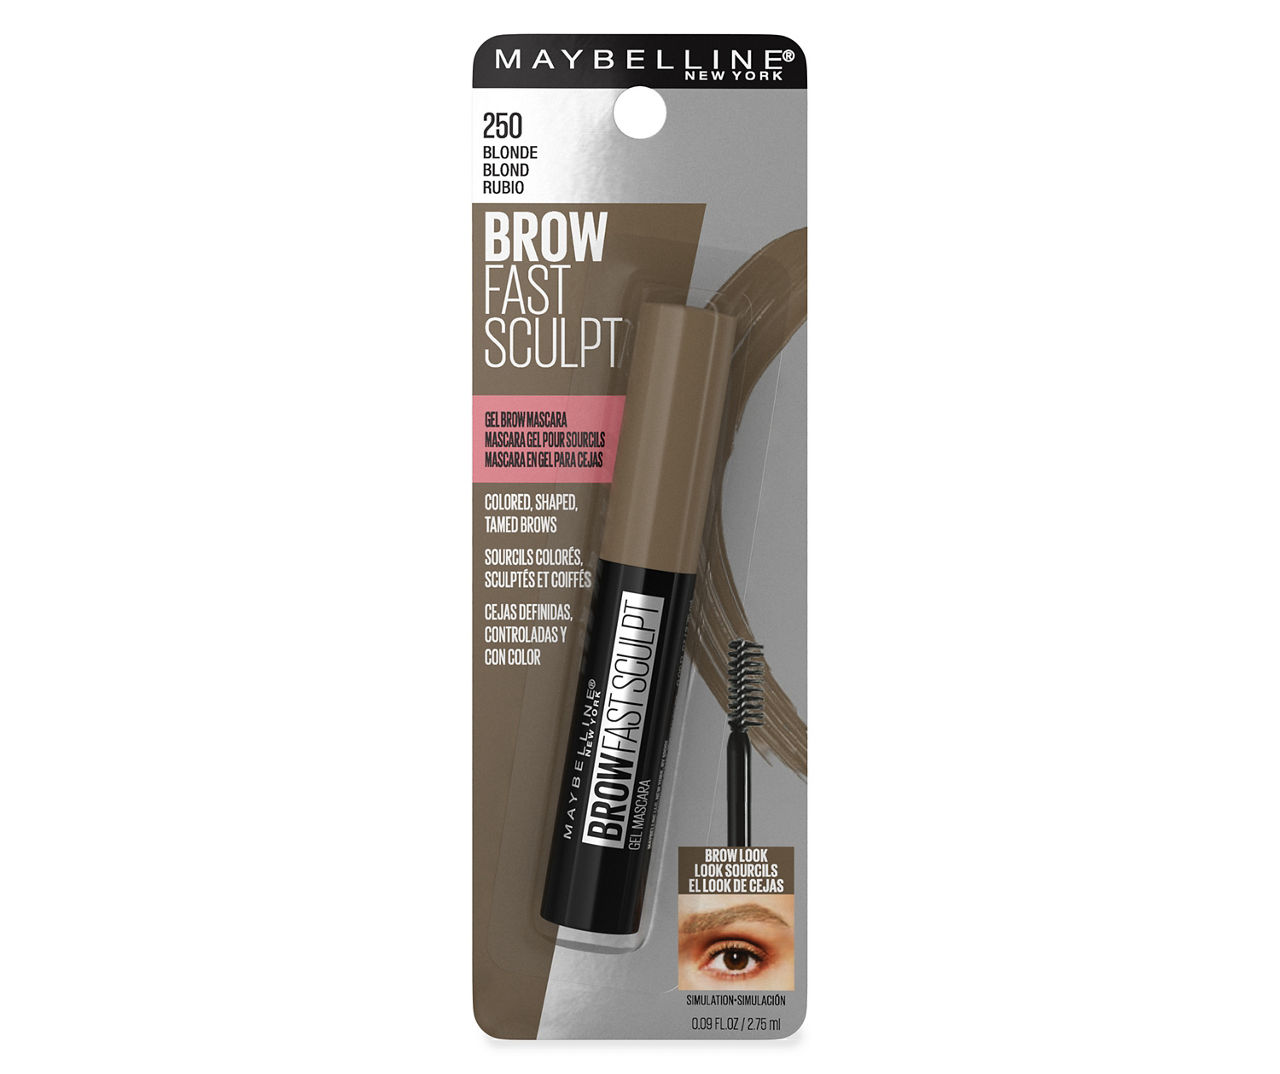 Maybelline Brow Fast Sculpt, Shapes Eyebrows, Eyebrow Mascara Makeup, Blonde, 0.09 fl. oz.